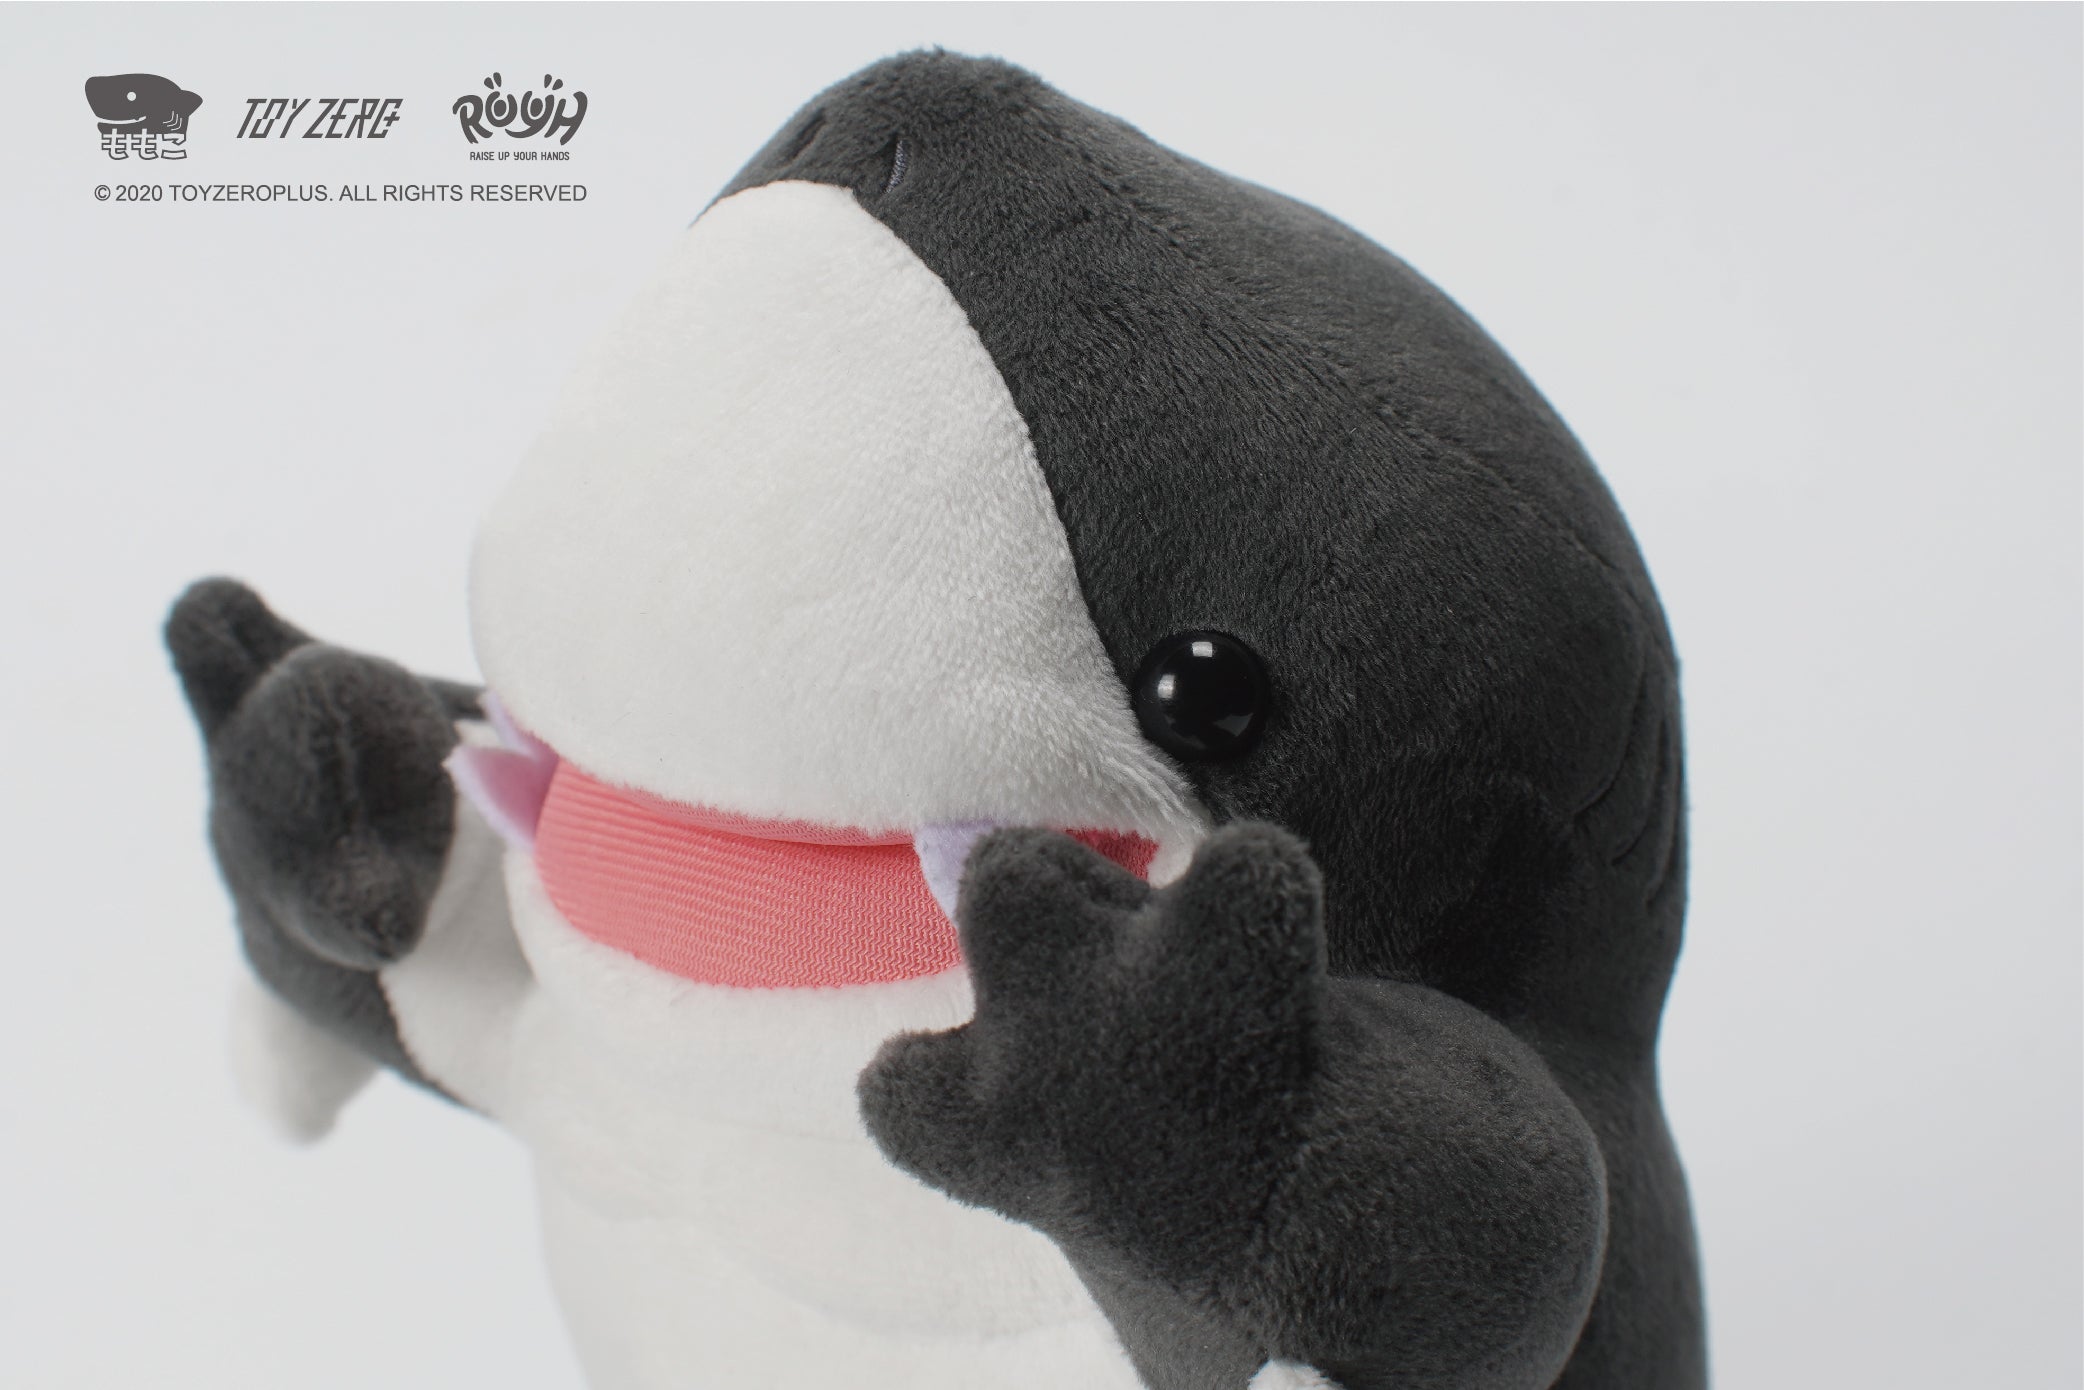 Raise Up Your Hands - Killer Whale Baby Shark (Plush Set)